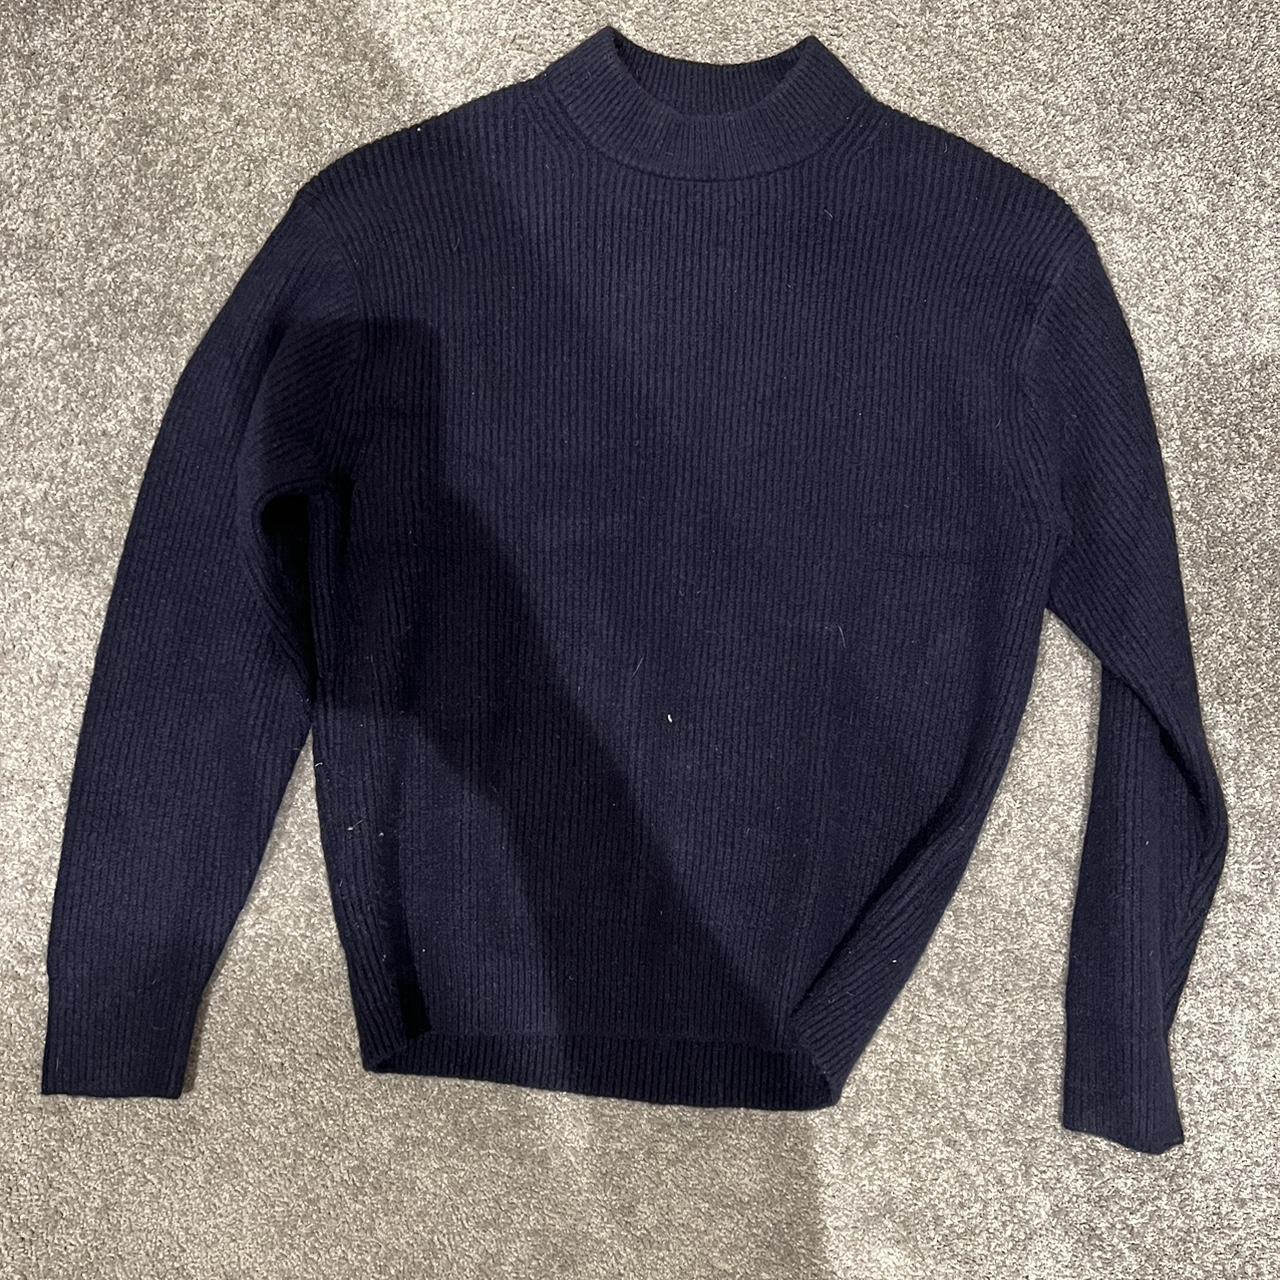 Uniqlo mock neck sweater Black/navy colour Like... - Depop